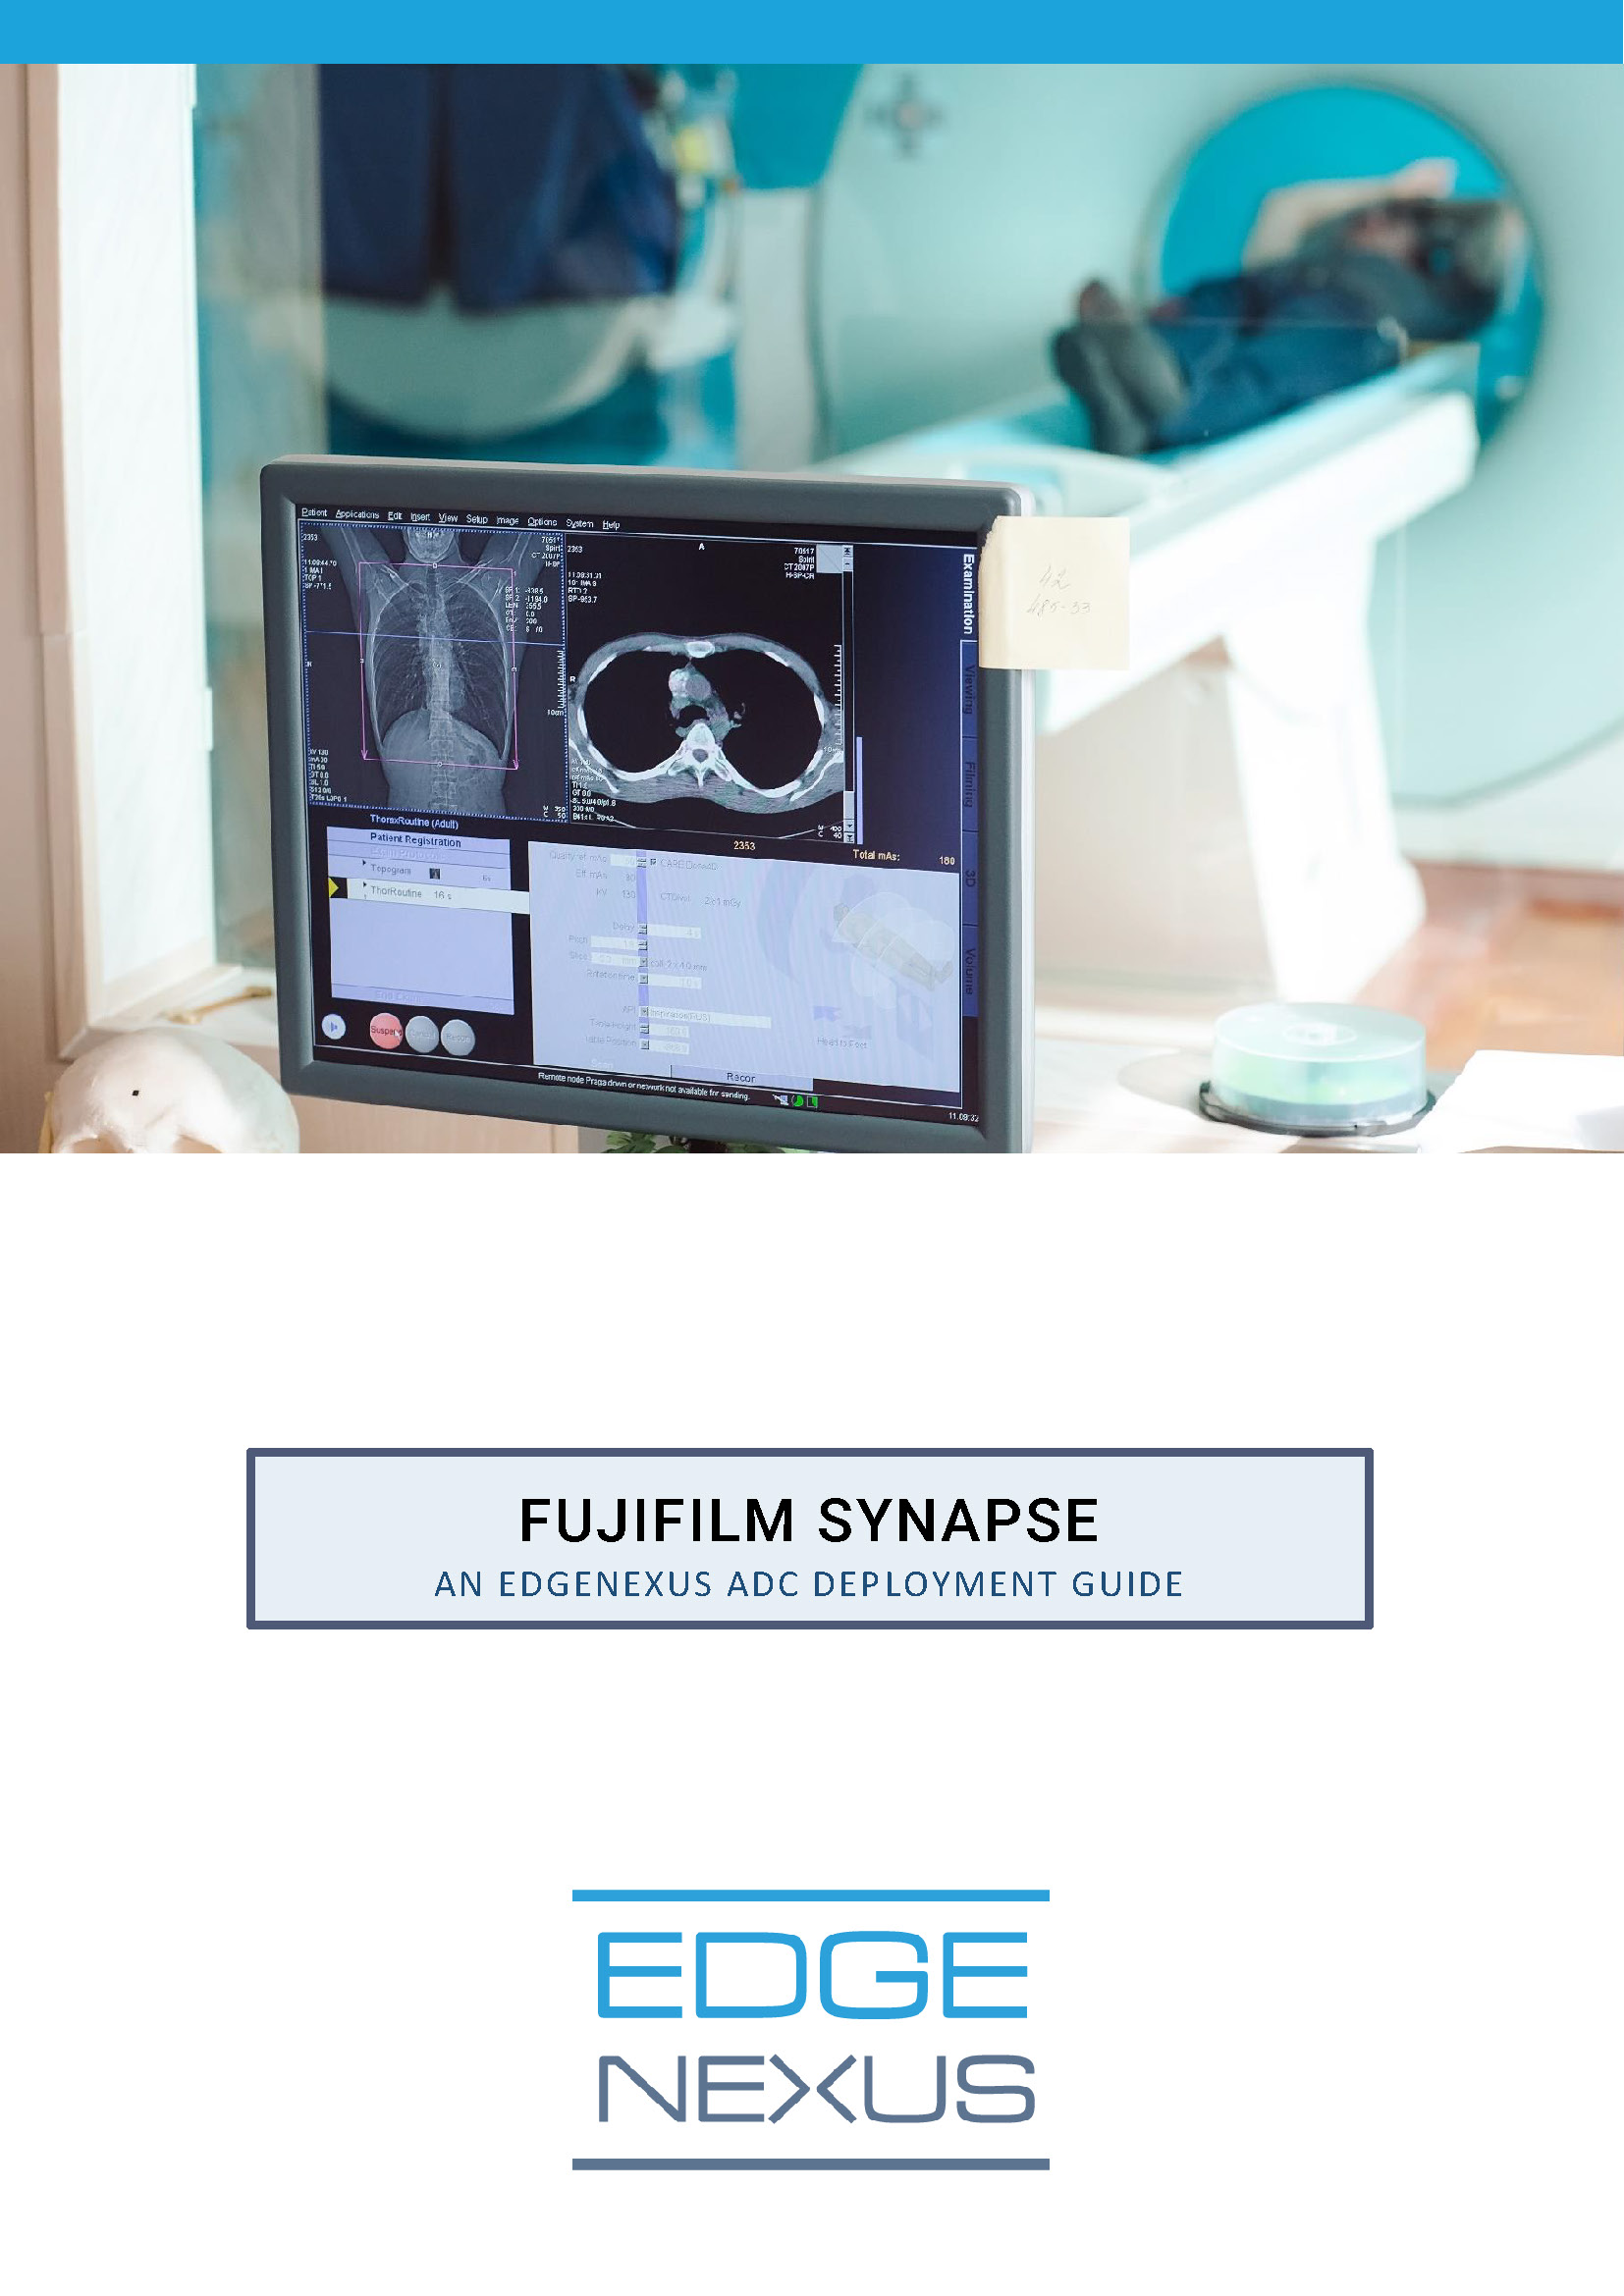 Fujifilm Synapse ADG